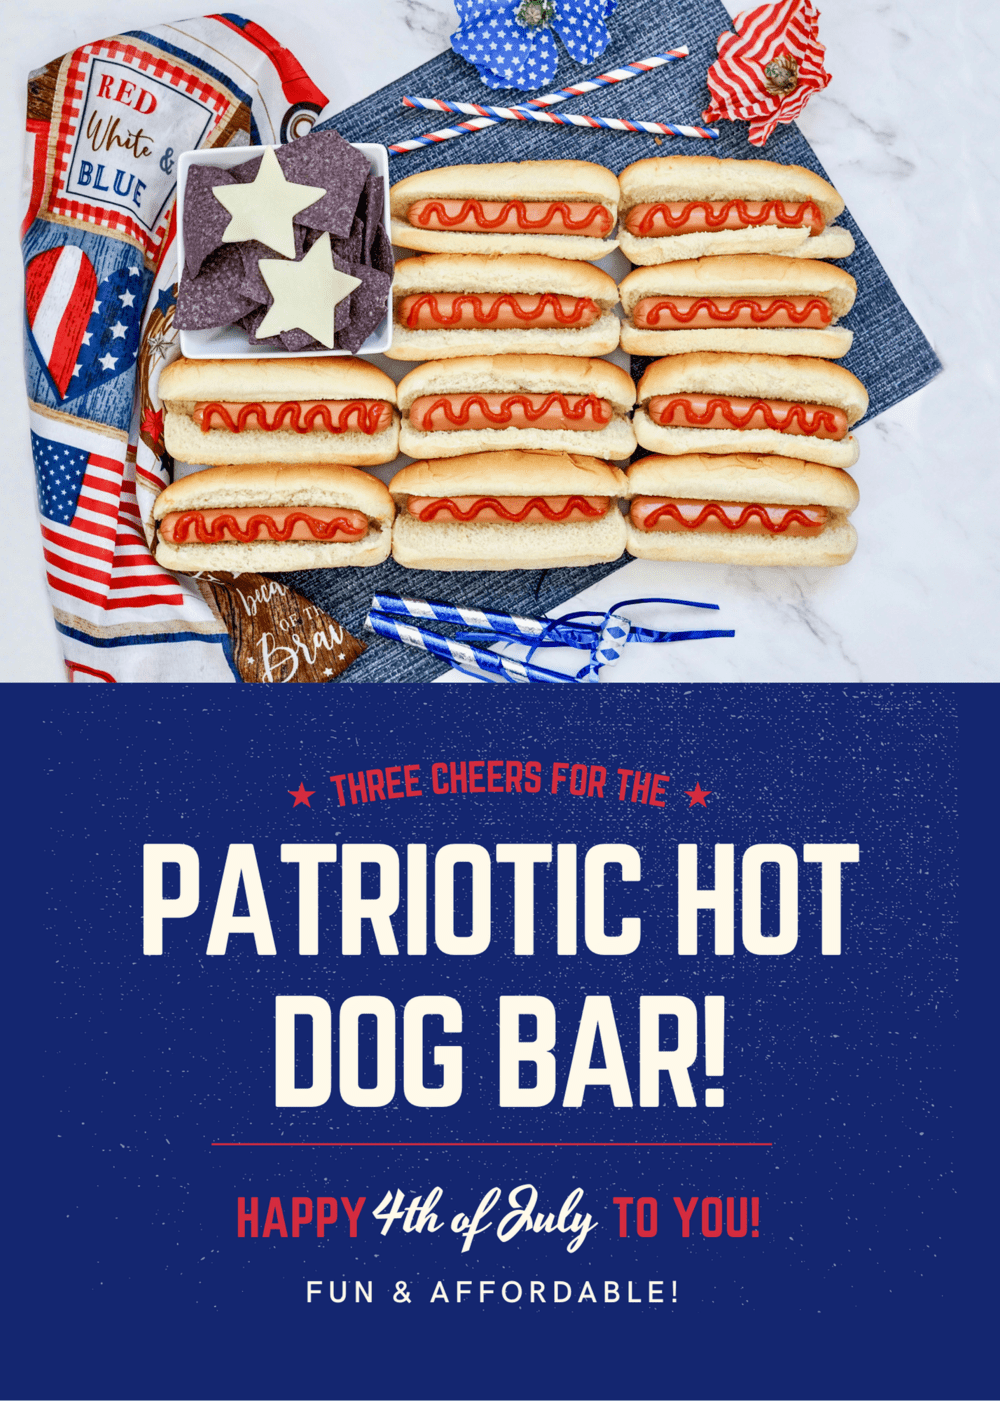 Patriotic Hot Dog Bar - Best Hot Dog bar Idea!